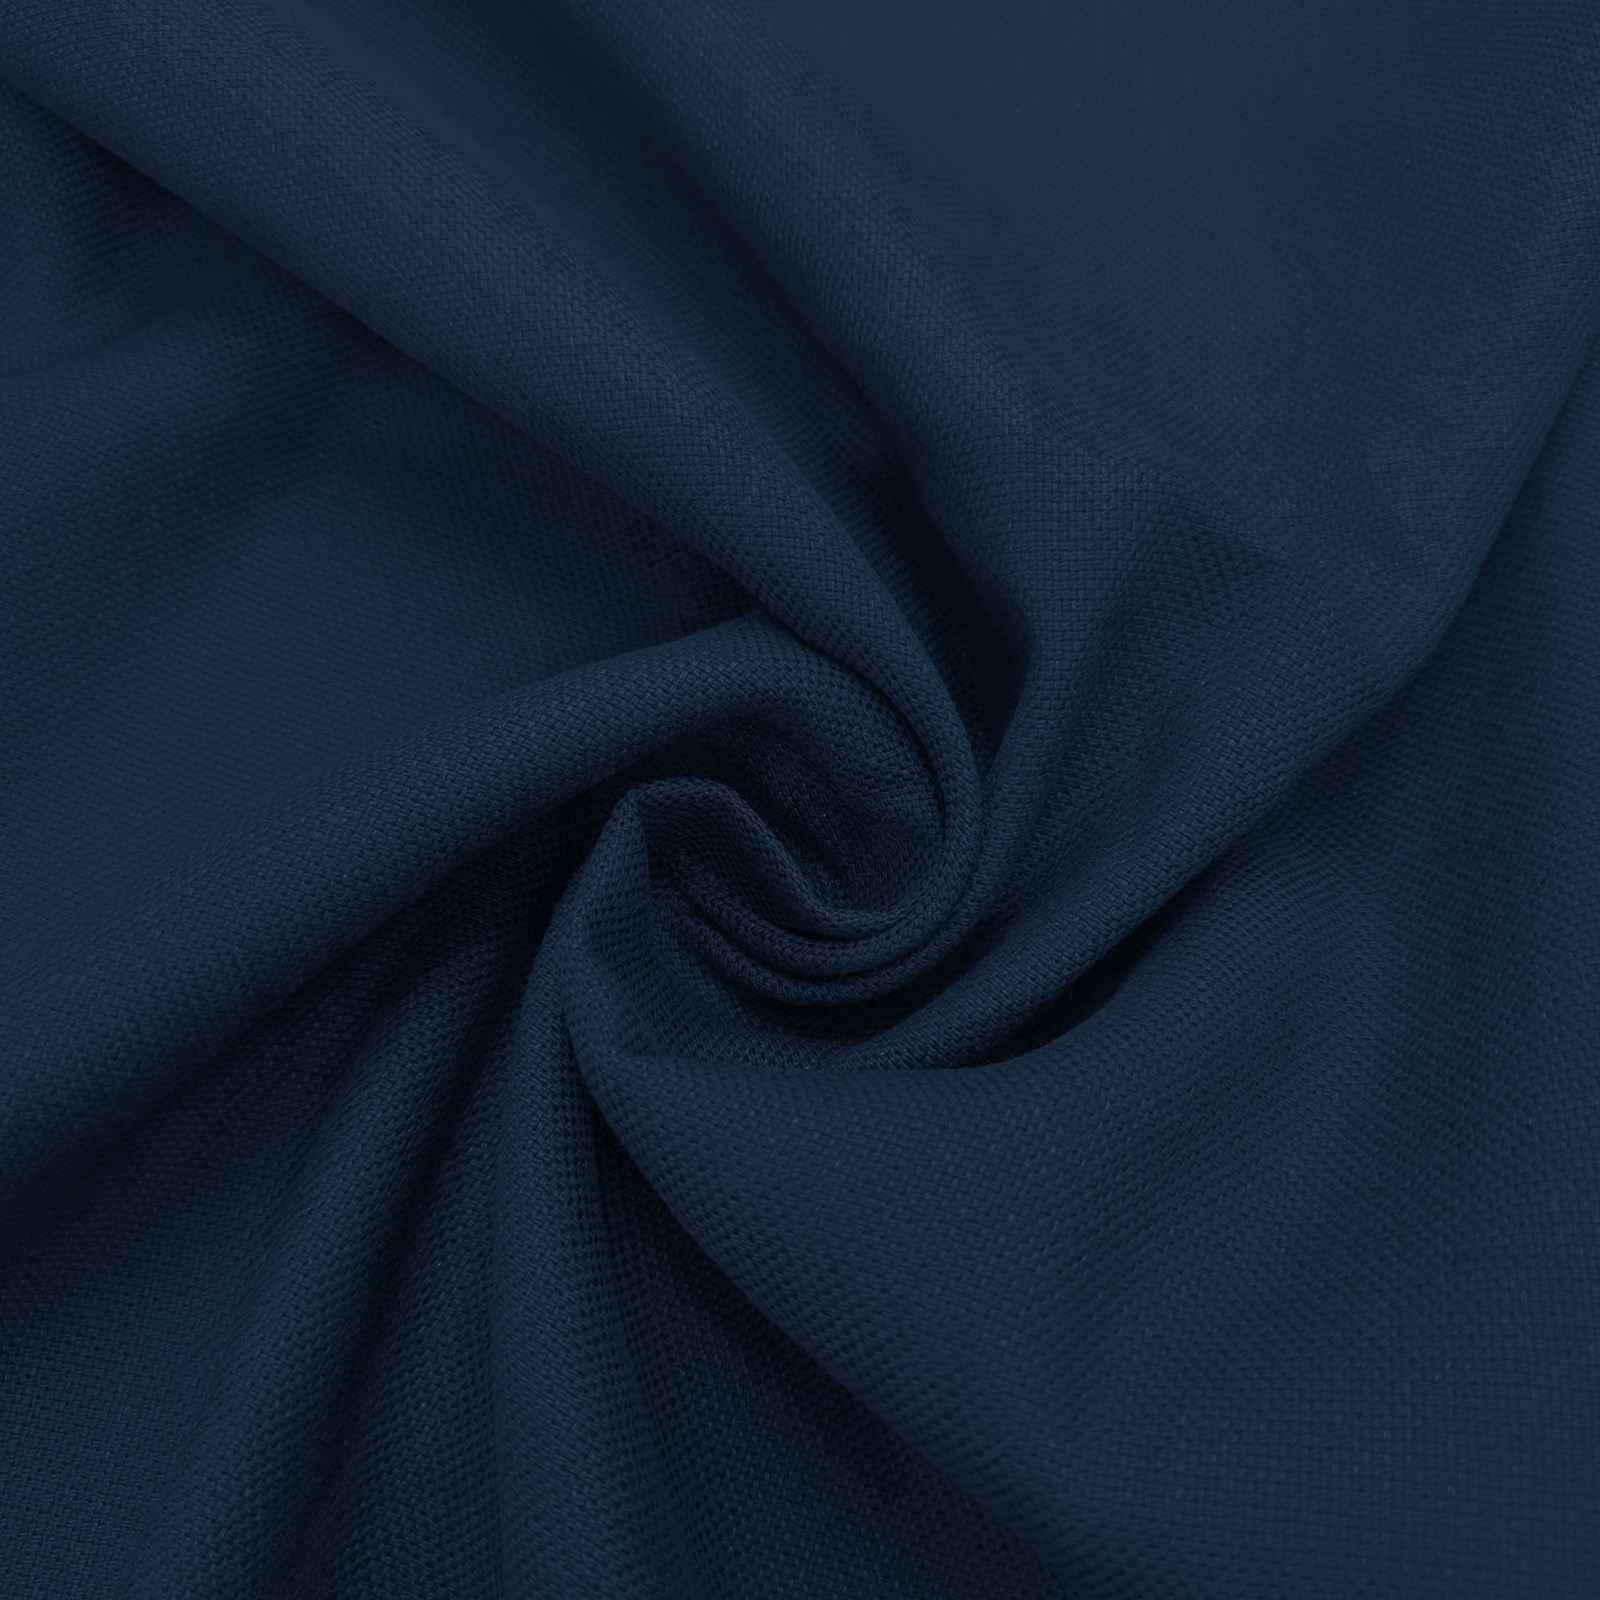 Rustico Tela de lino - "azul marino"